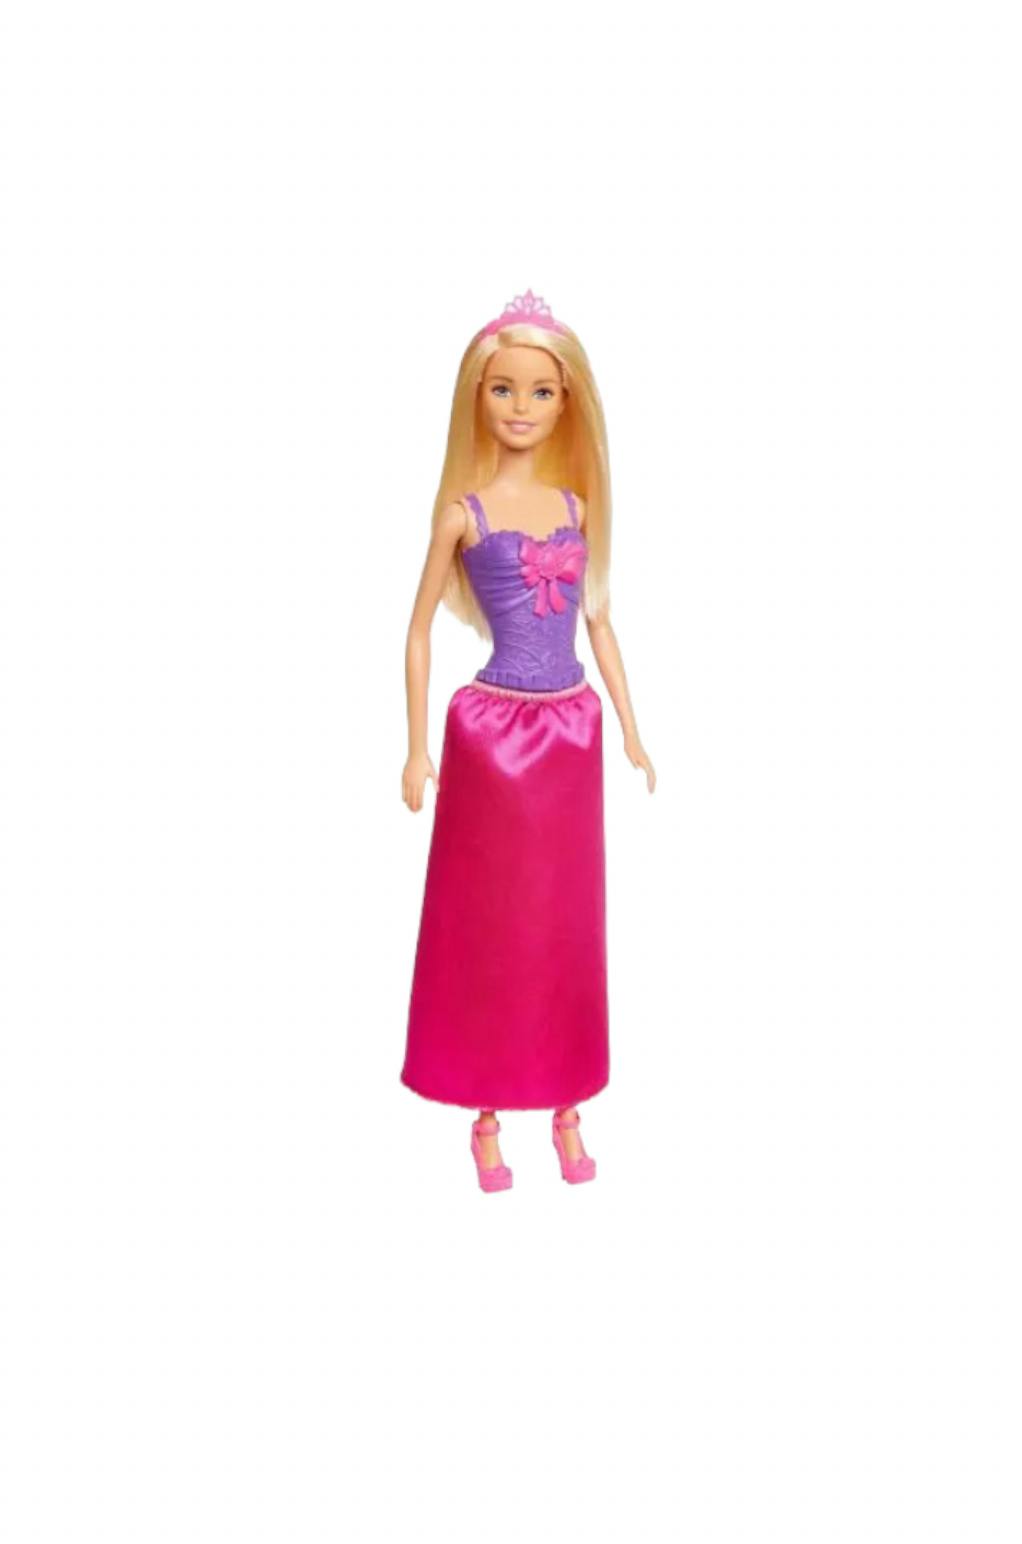 En Vacker Barbie Princess Docka